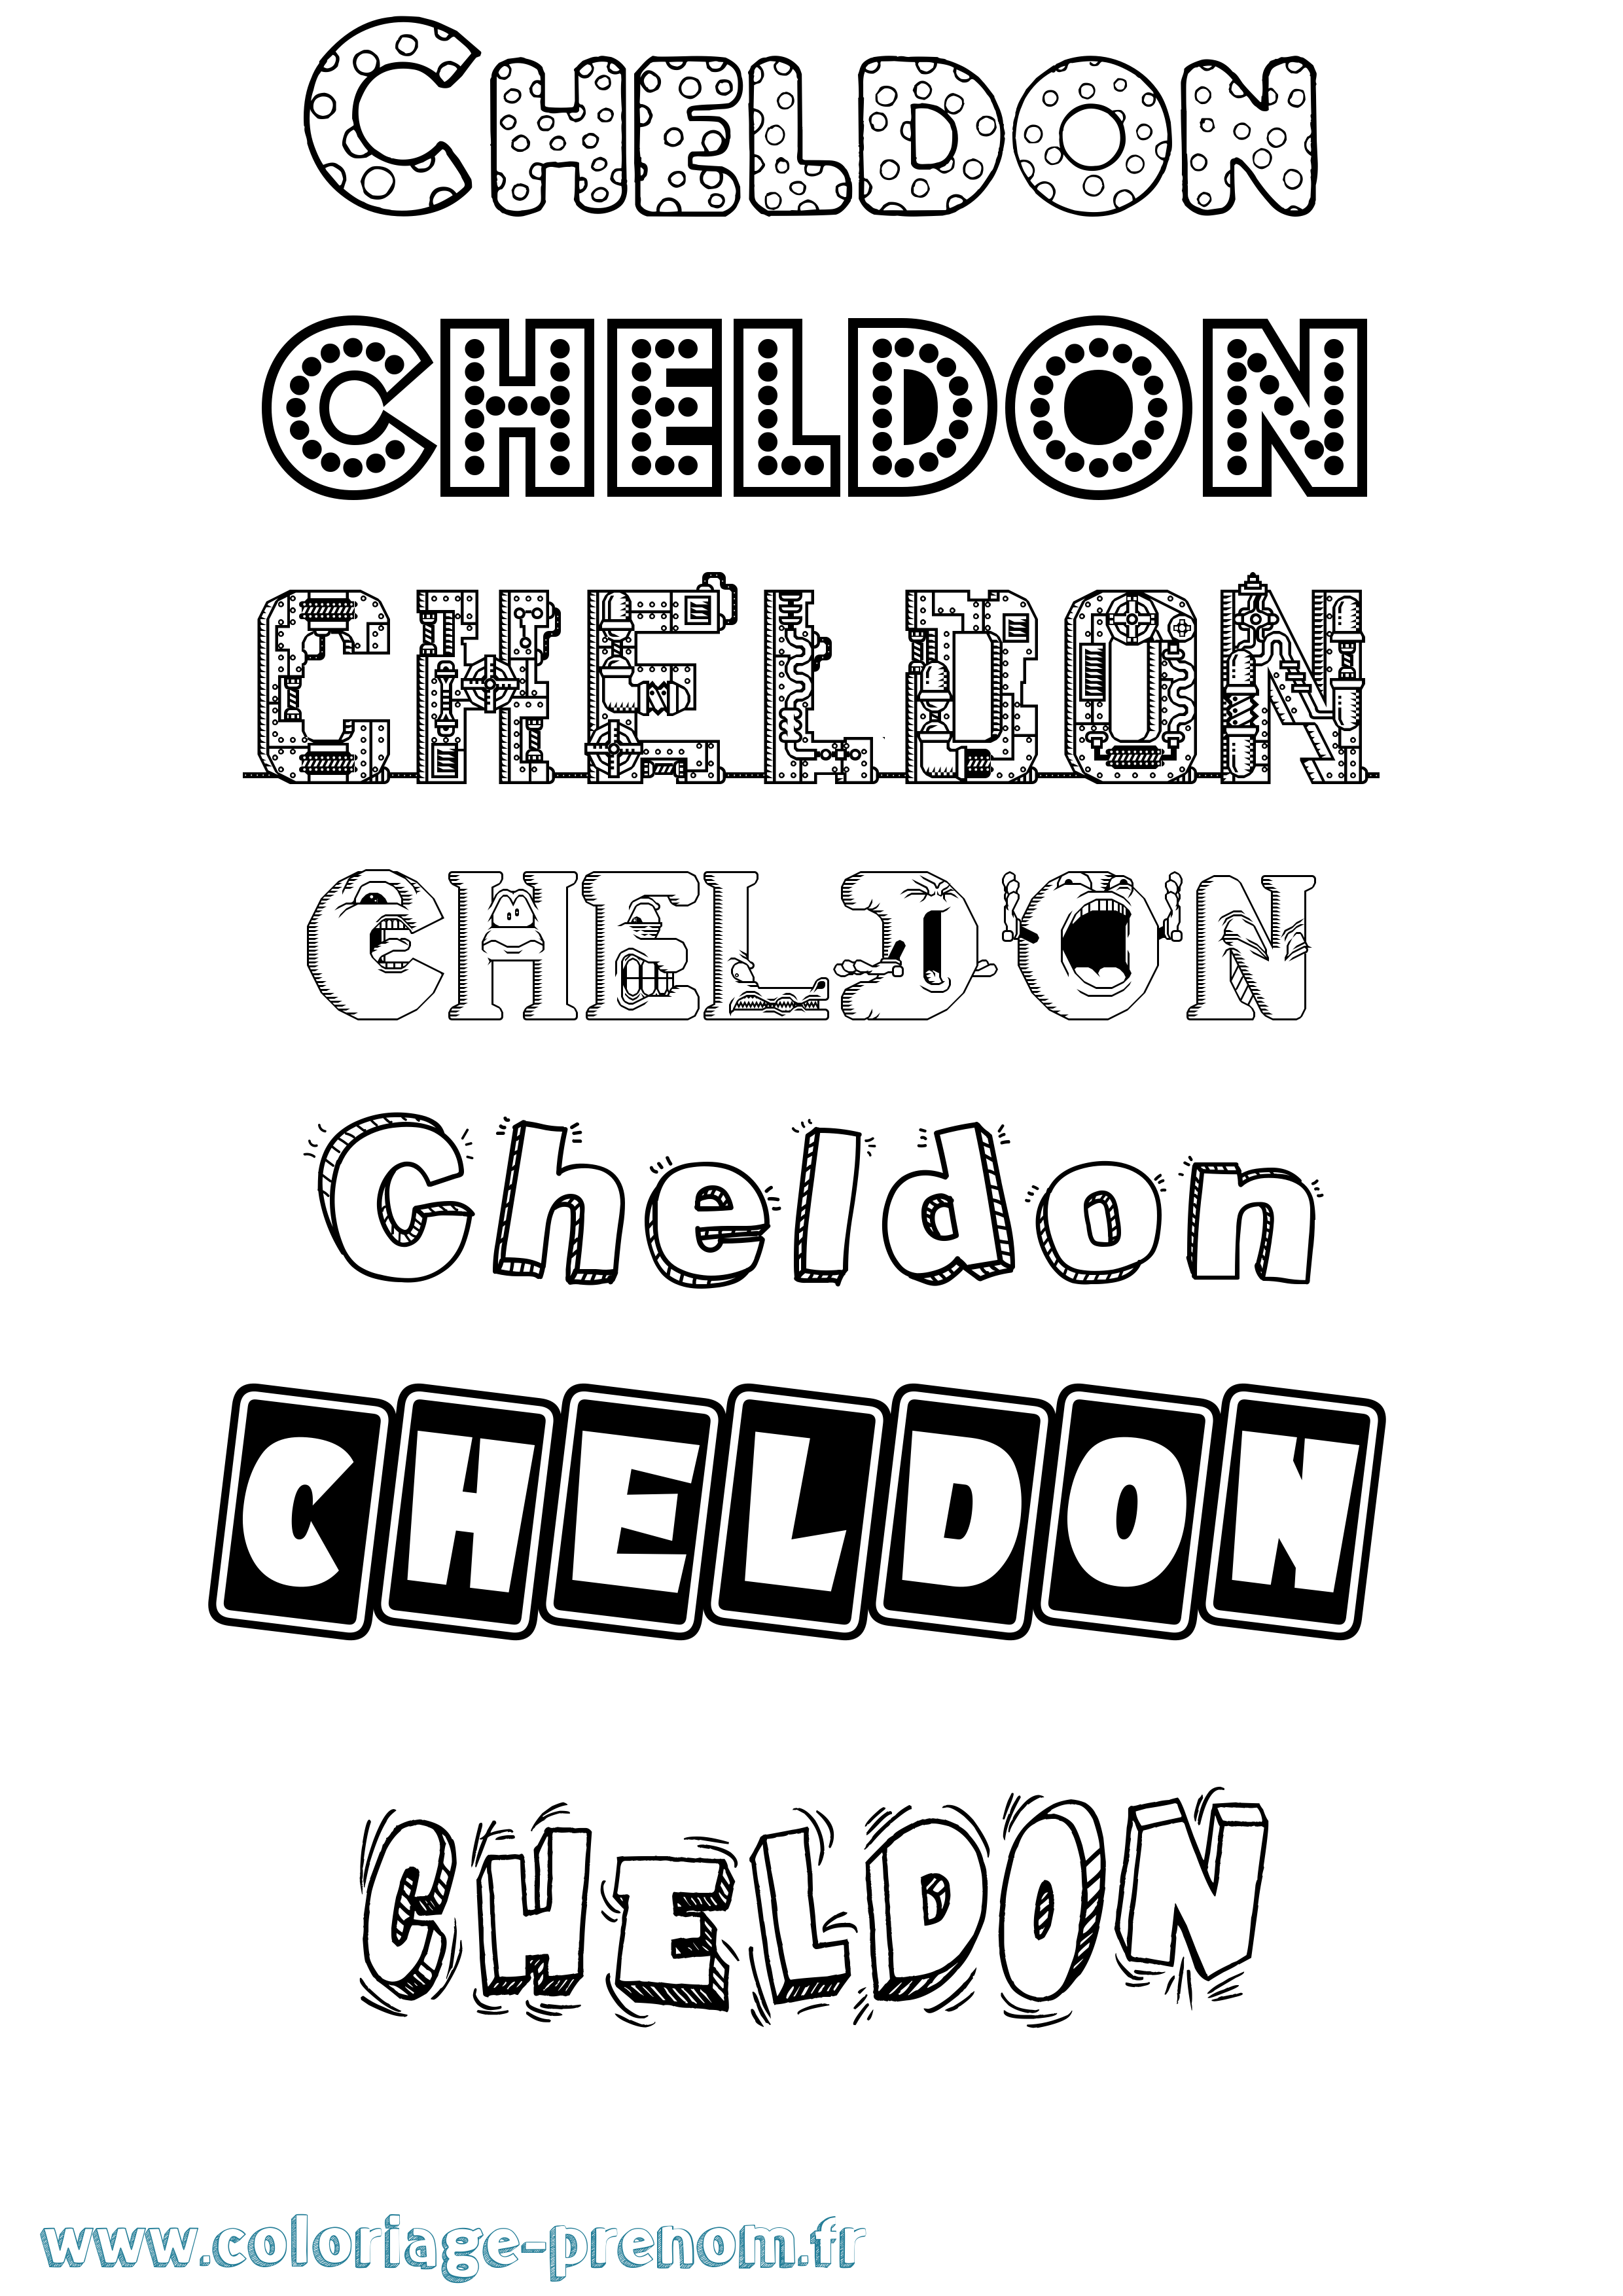 Coloriage prénom Cheldon Fun